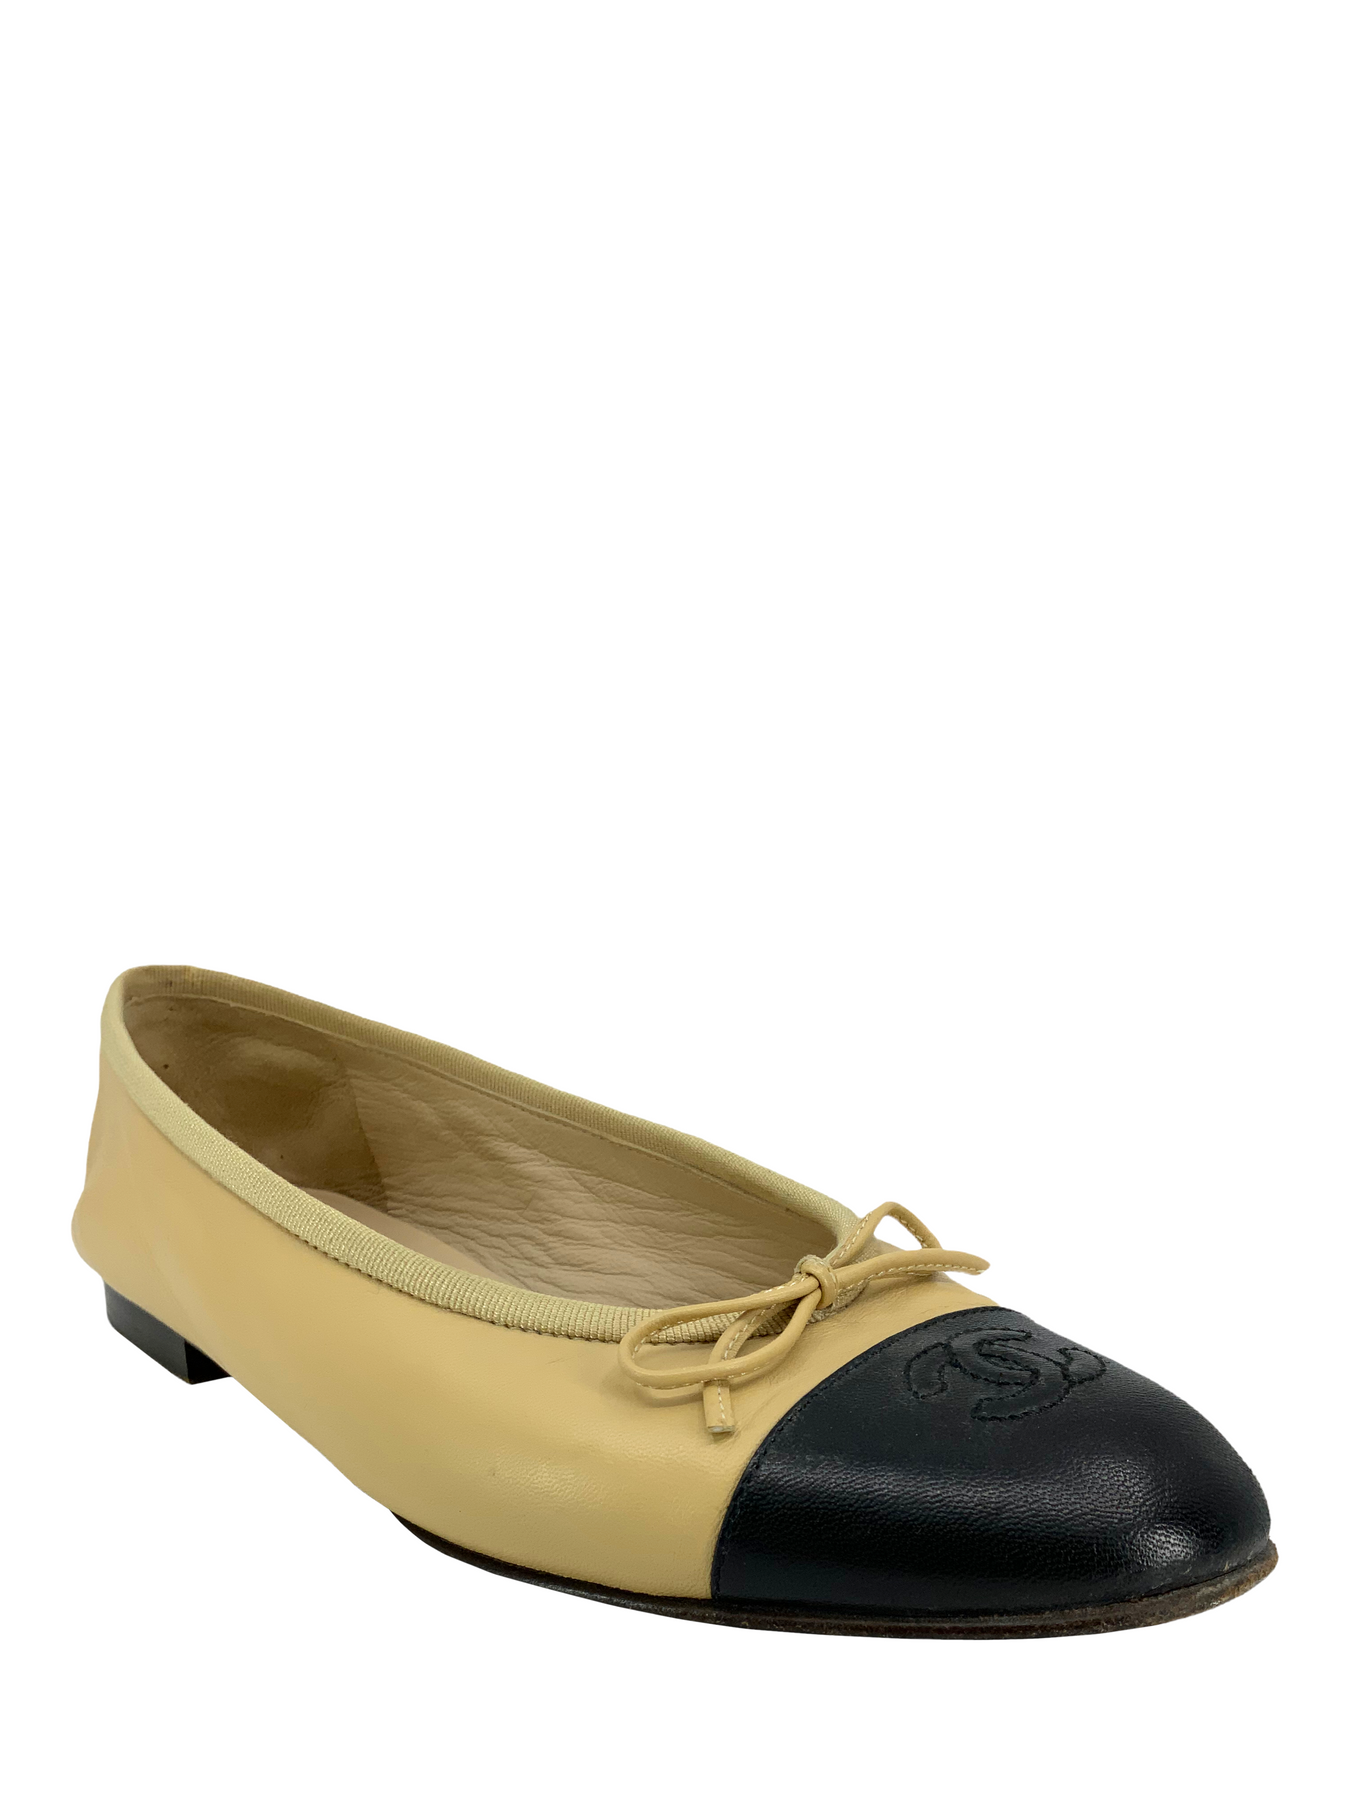 Chanel CC Cap Toe Lambskin Leather Ballet Flats Size 8.5